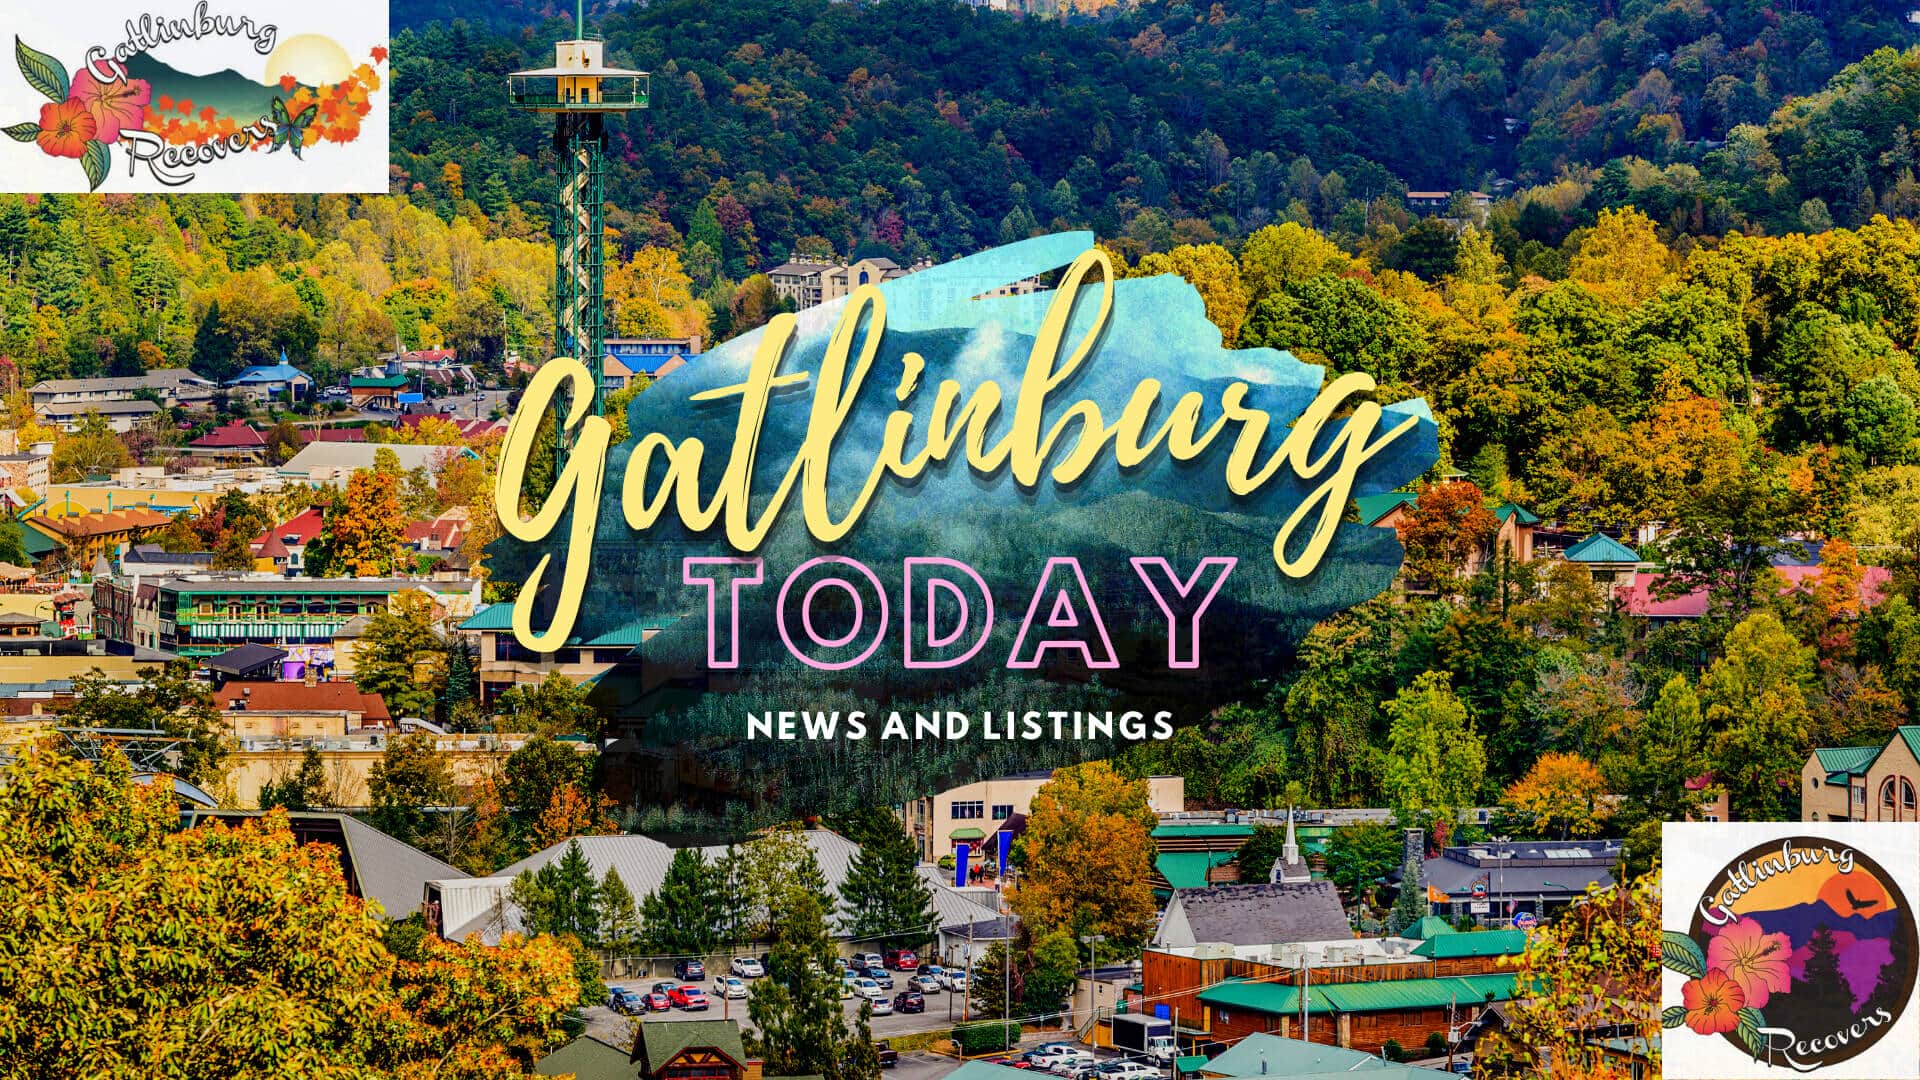 Gatlinburg Today | News and Listings On Gatlinburg, TN